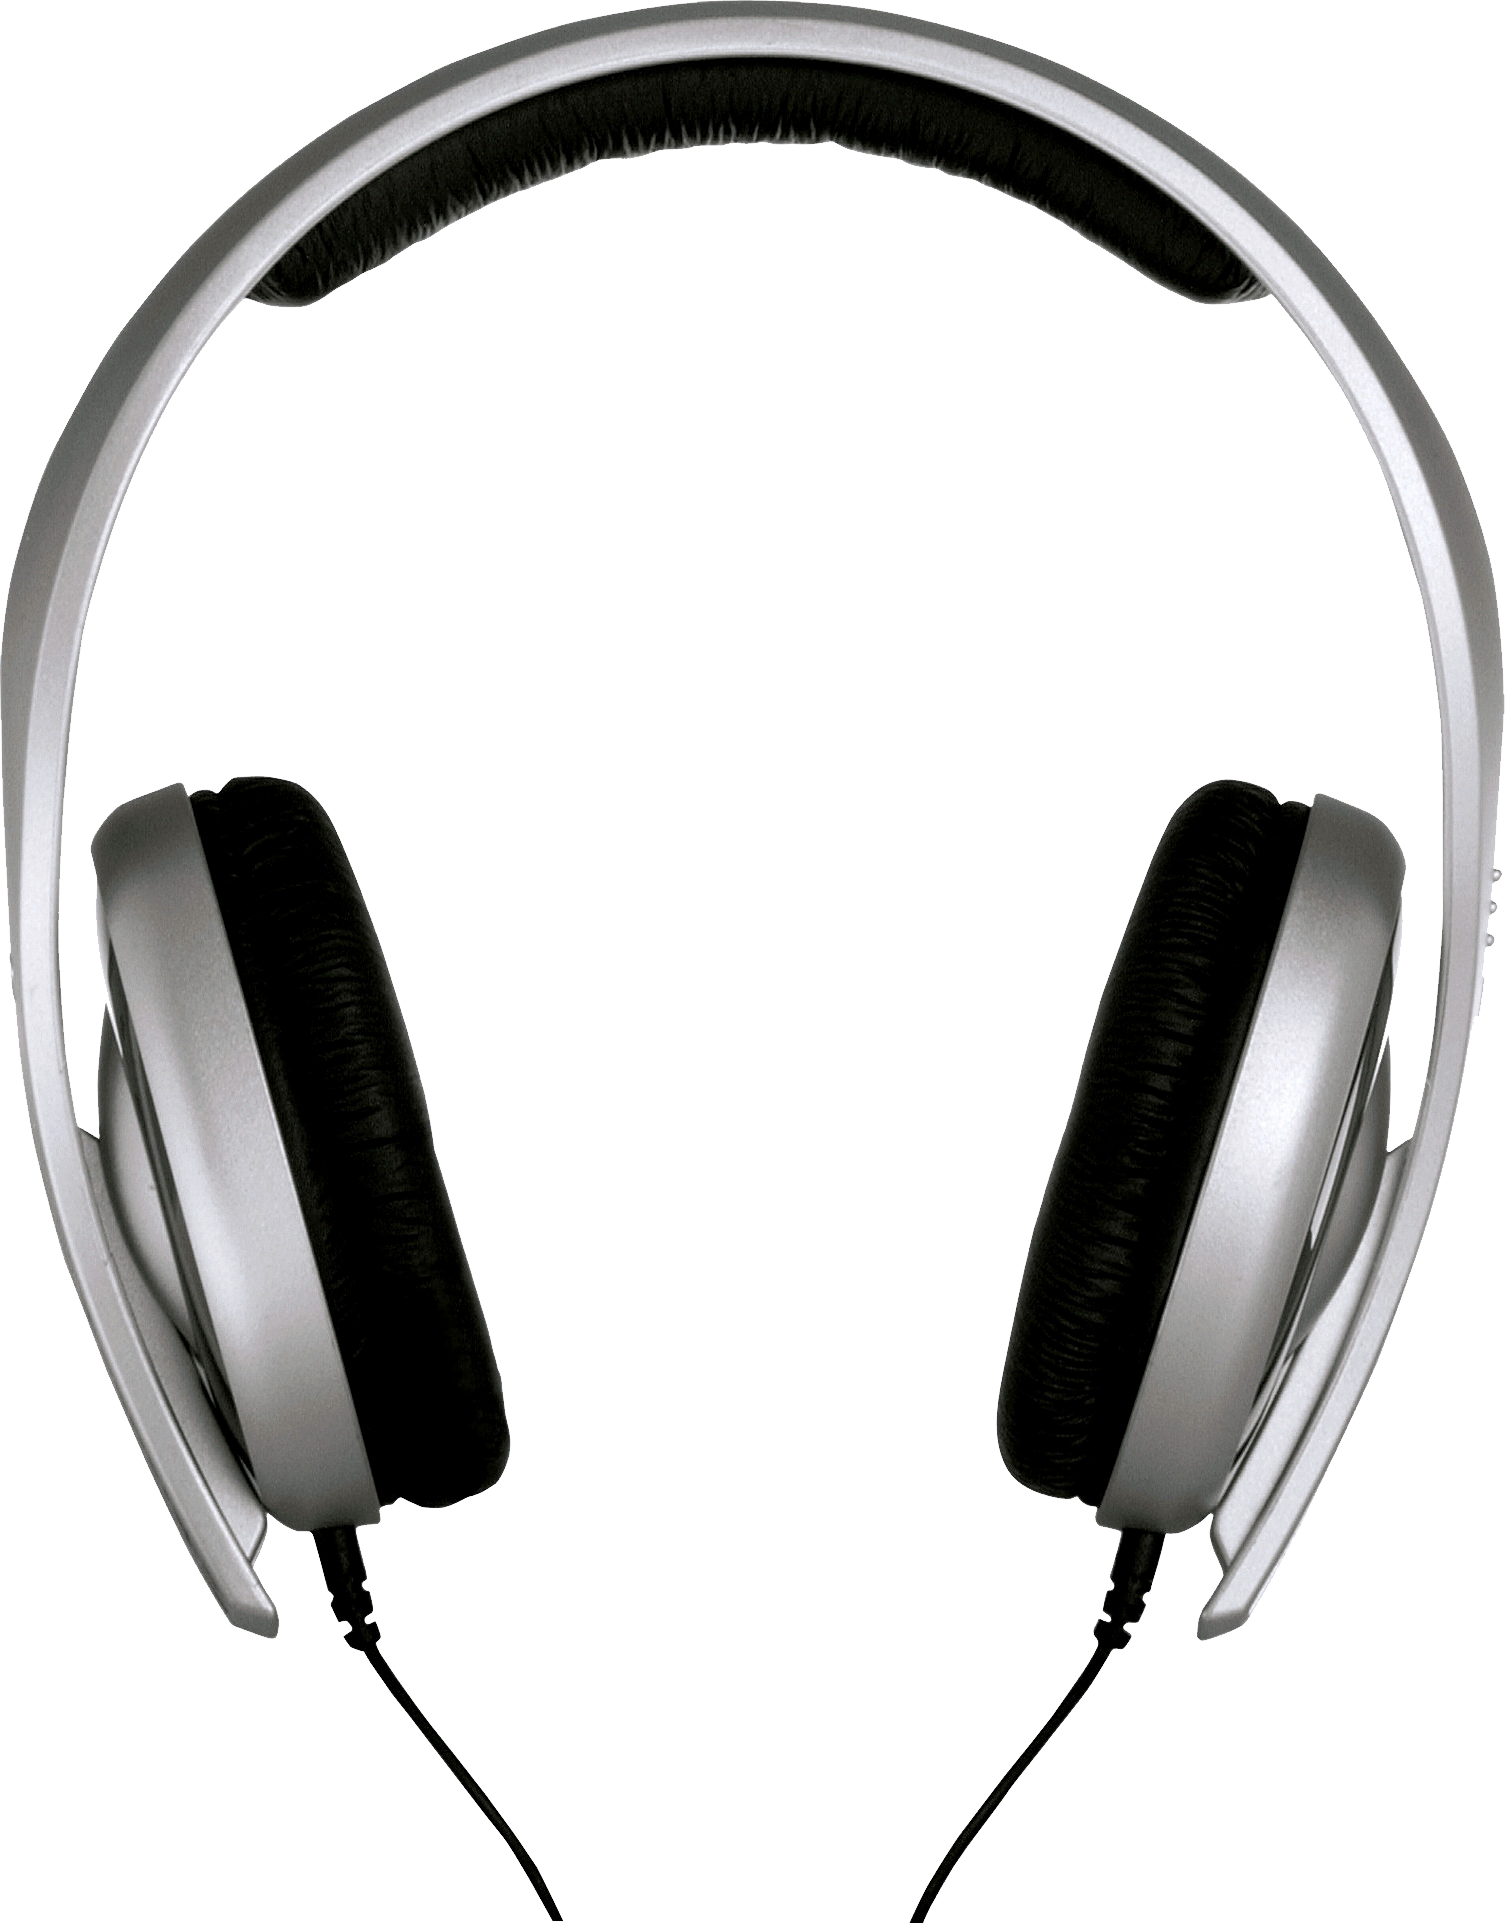 Drawn Headphone Transparent Background - Sennheiser Hd 212 Pro (1505x1923)